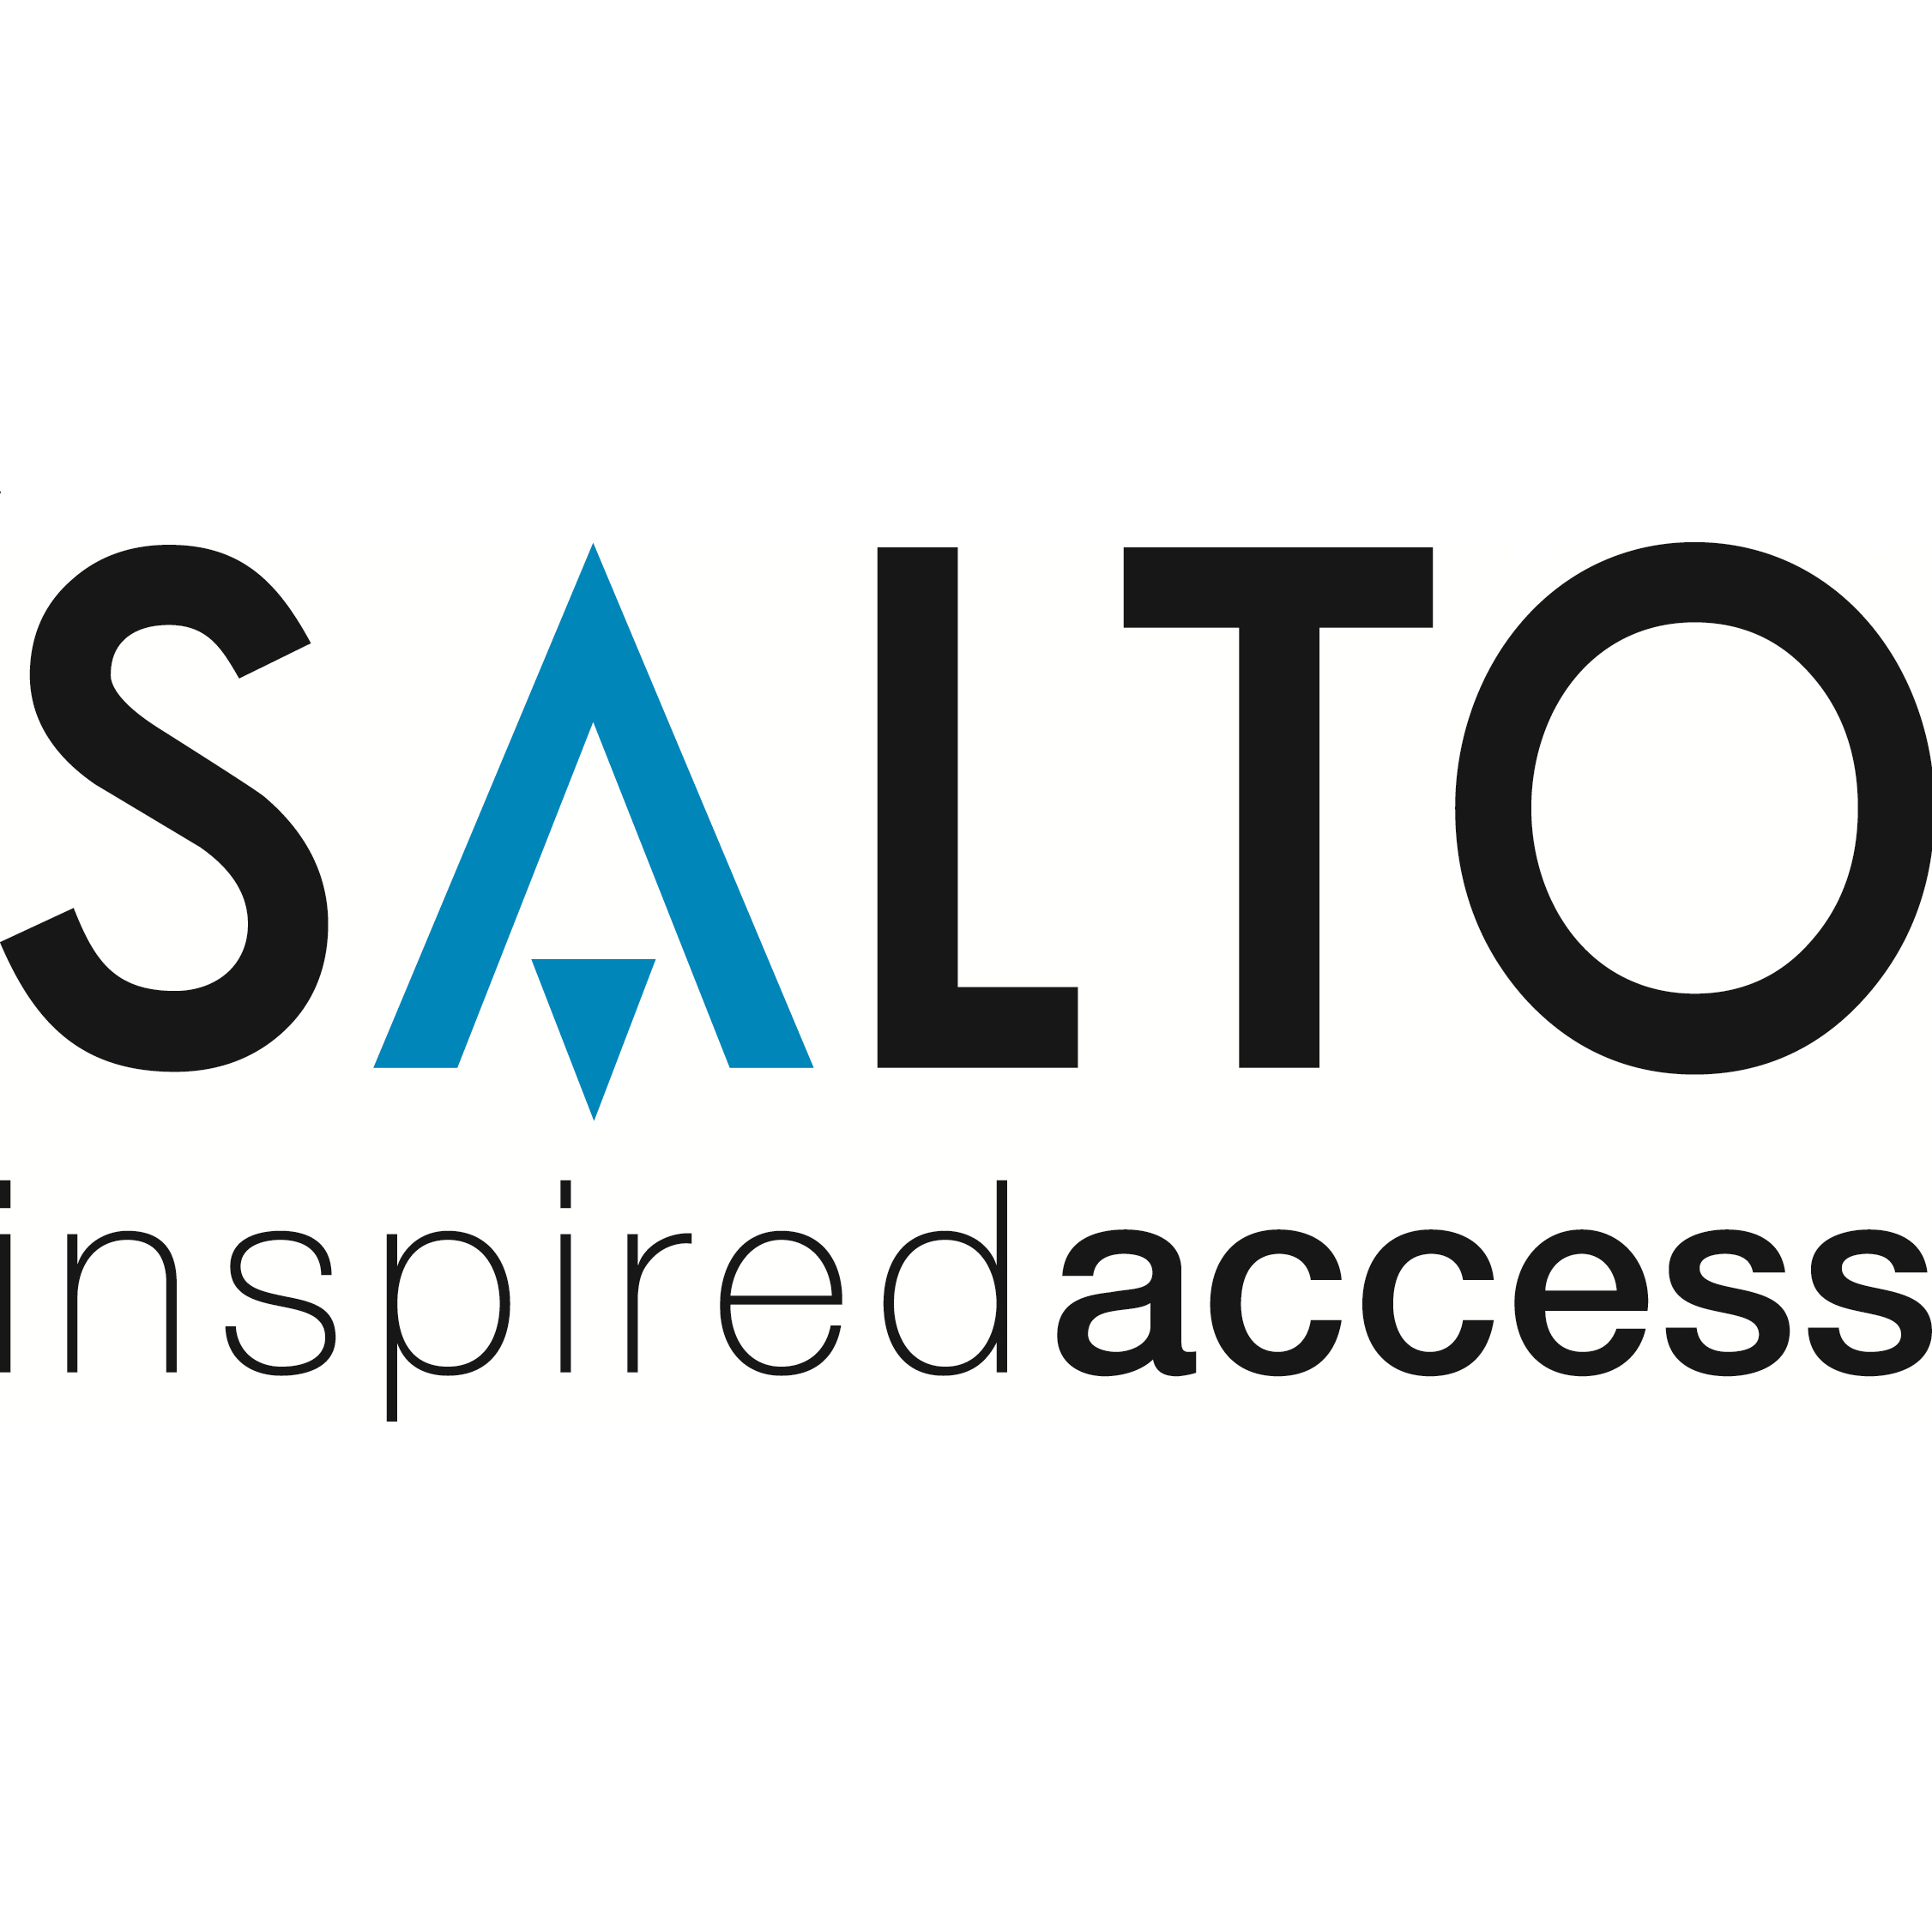 SALTO_inspired_access_LOGO.png